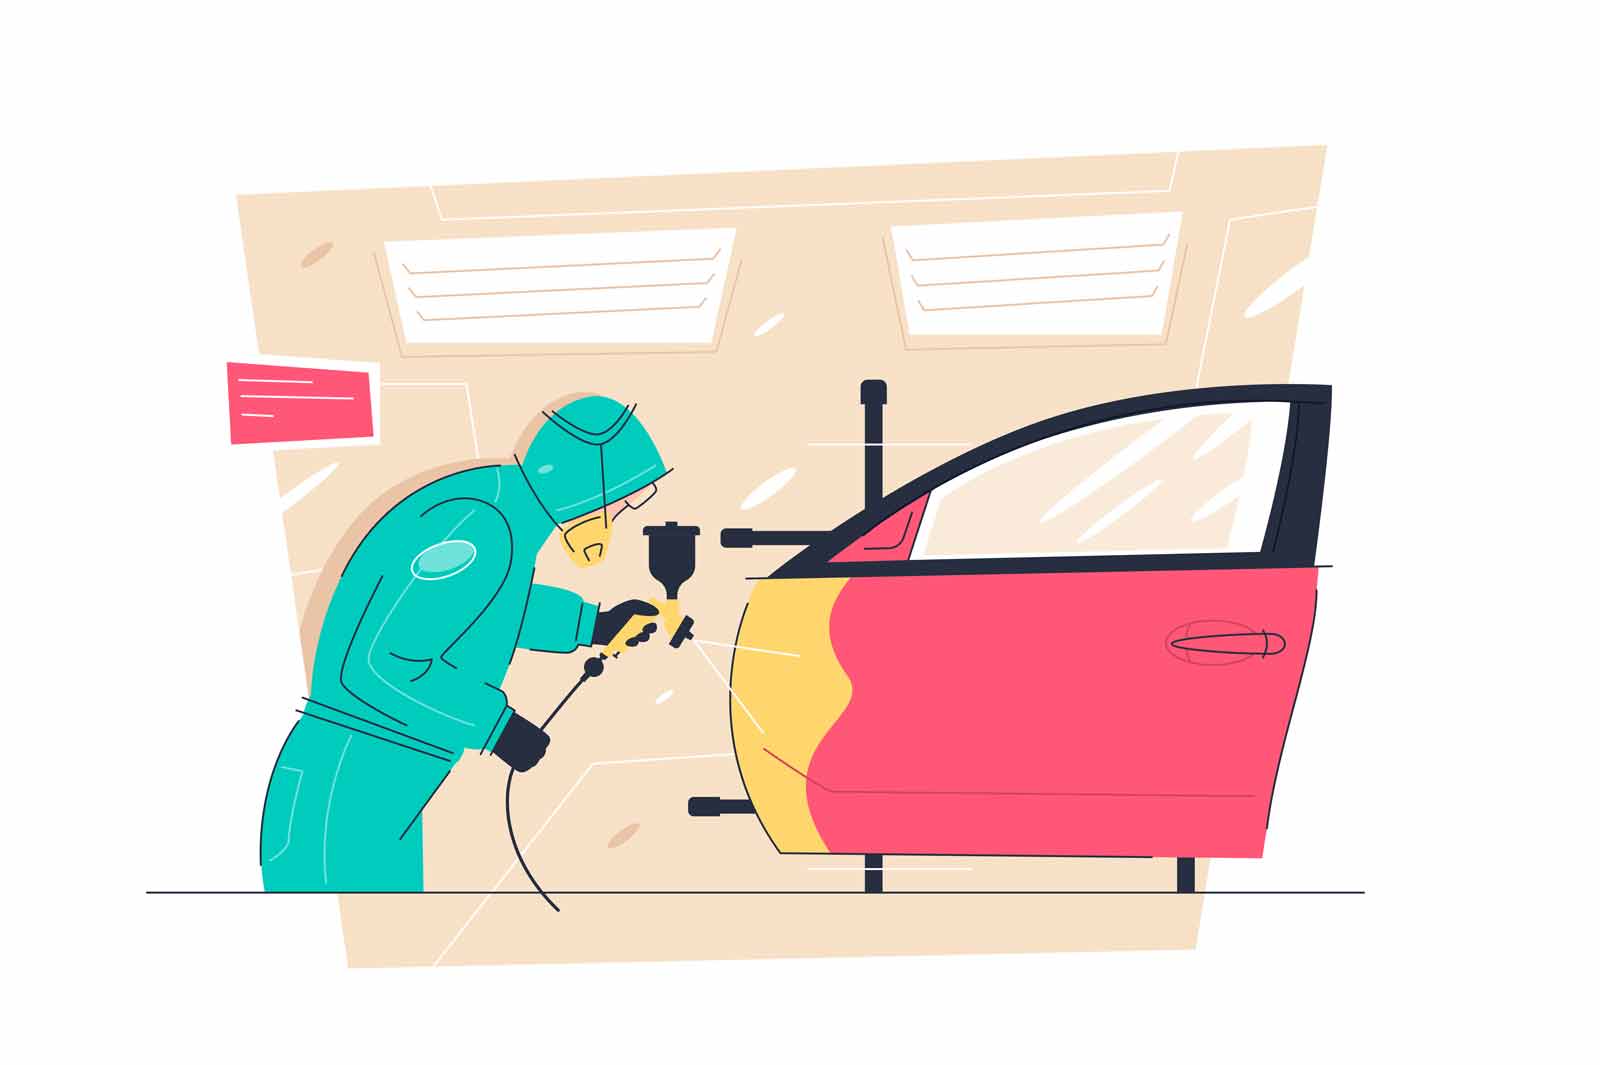 Car painting service and auto fix process vector illustration. Mechanic apply yellow paint flat style. Automotive workshop concept